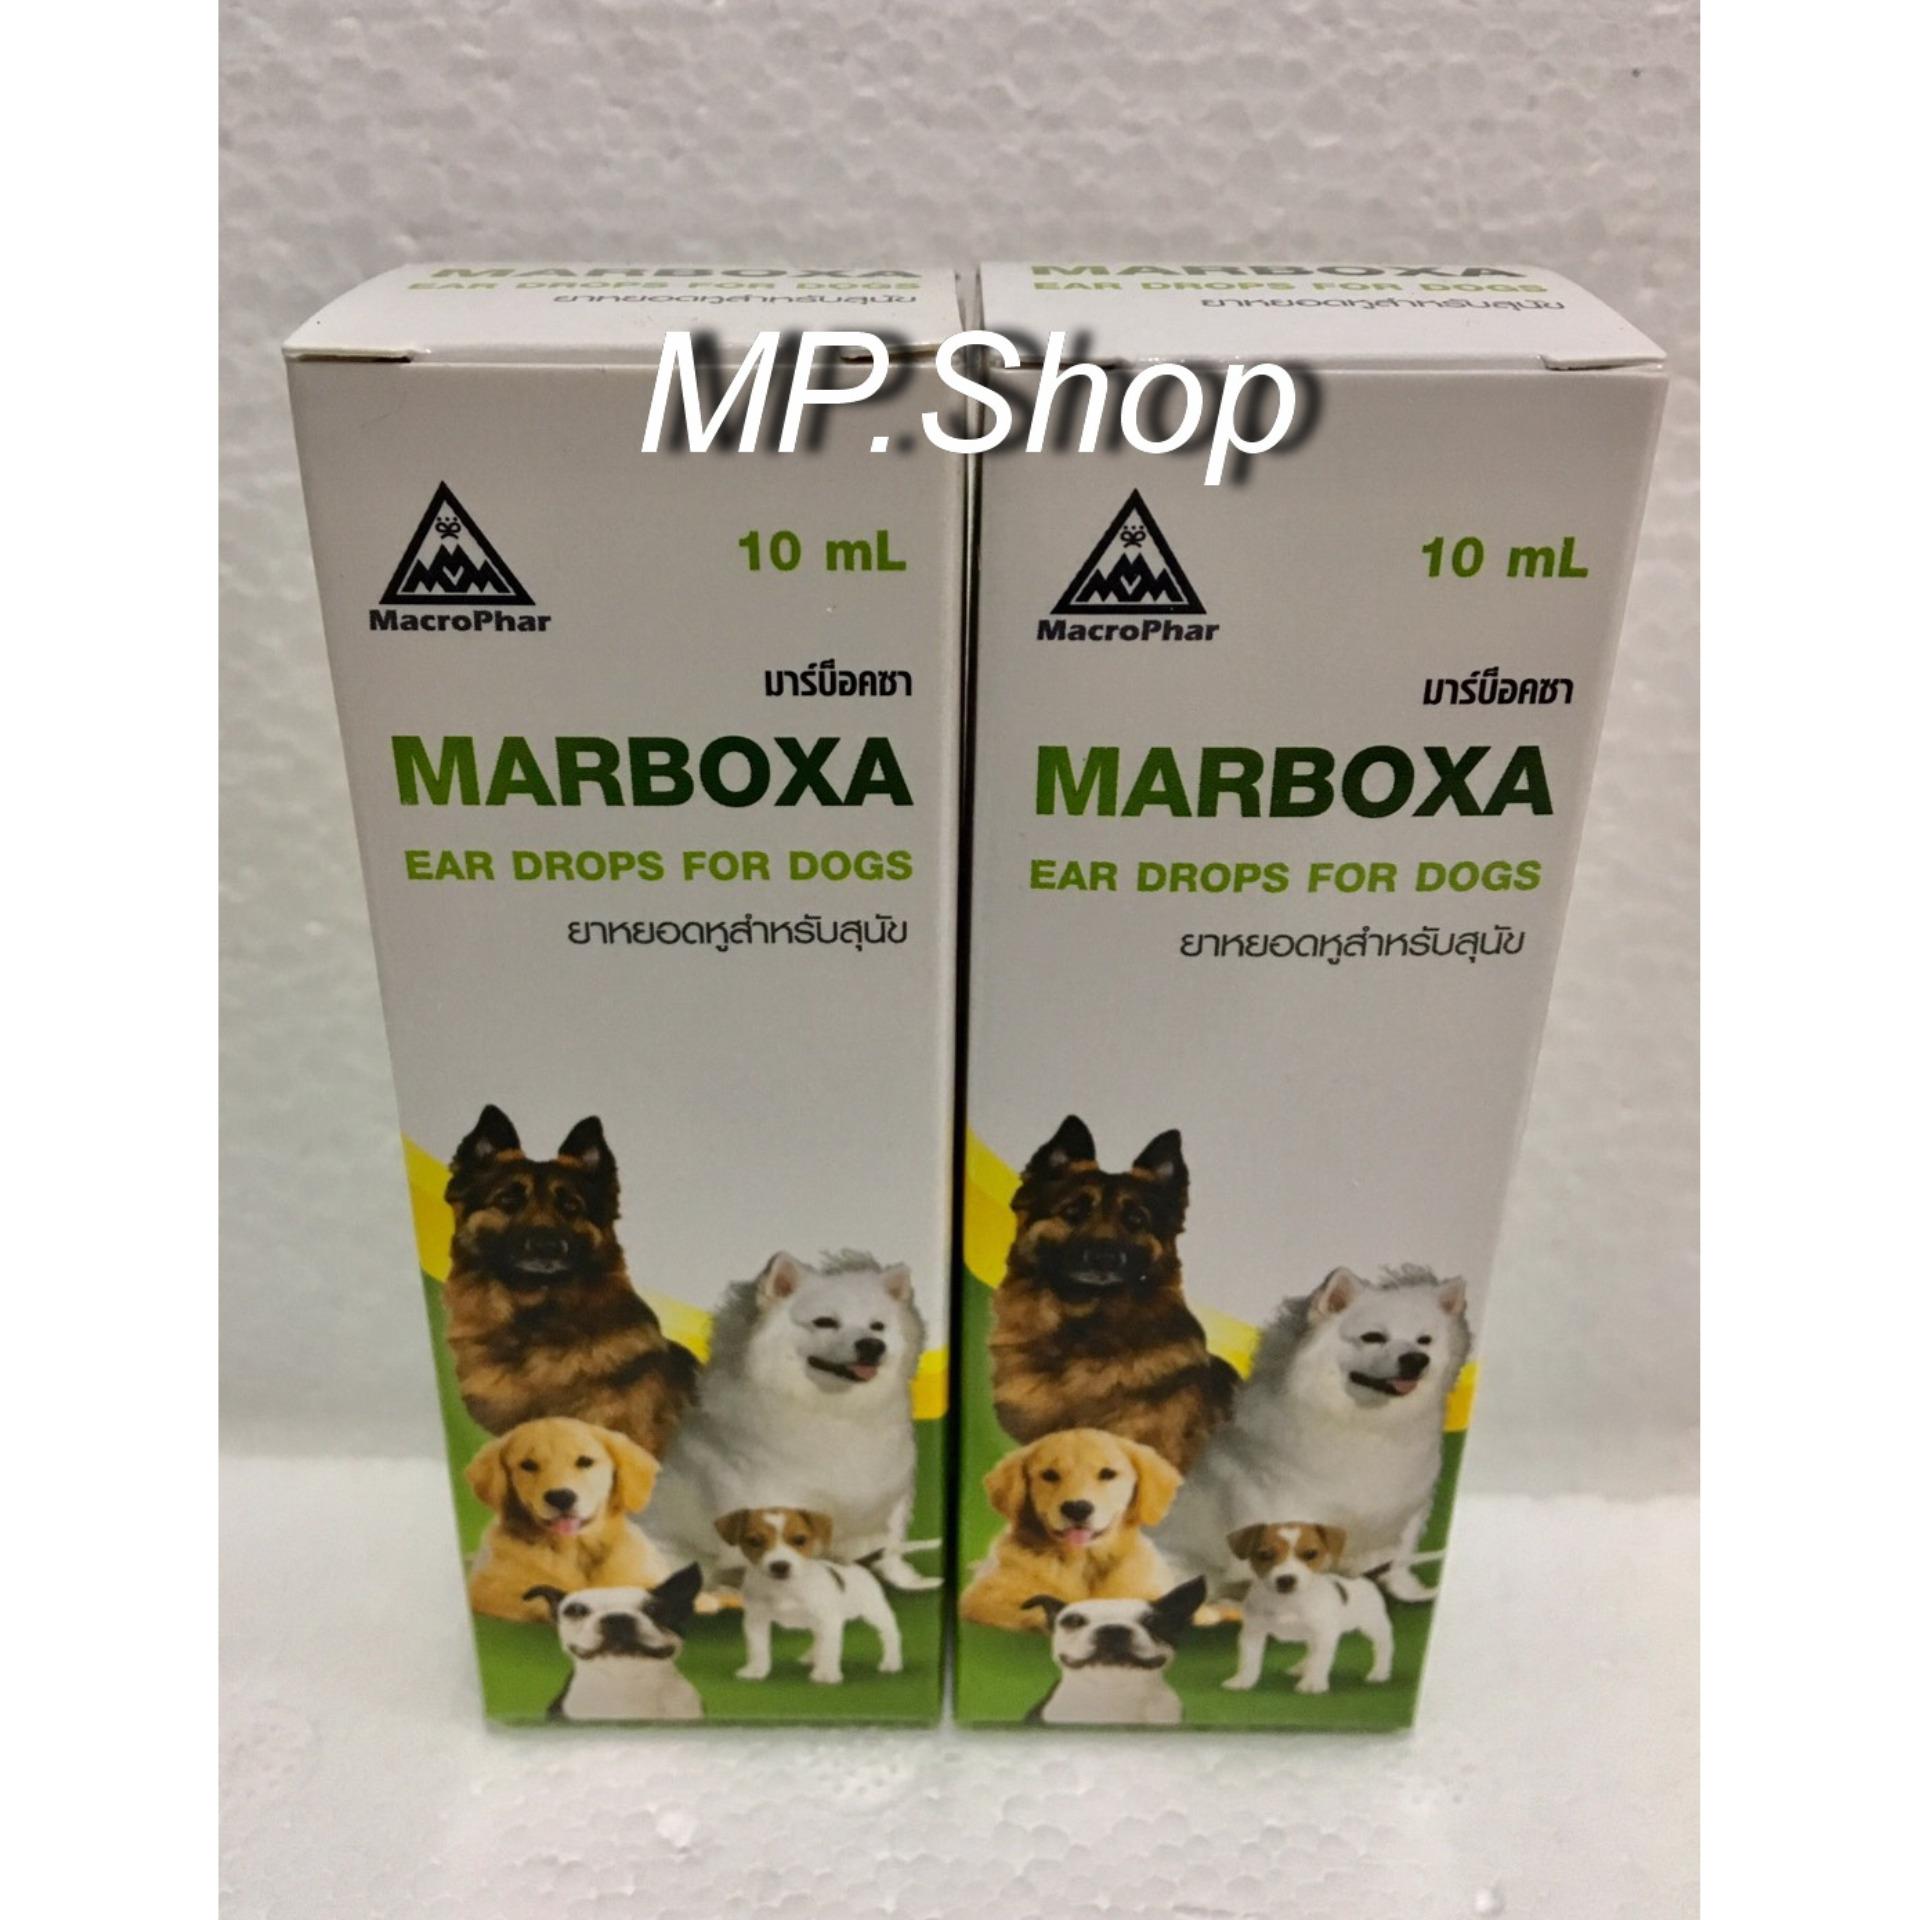 Marboxa ยาหยอดหู รักษาการอักเสบของหูชั้นนอก สำหรับสุนัข 10 ml x 2ขวด